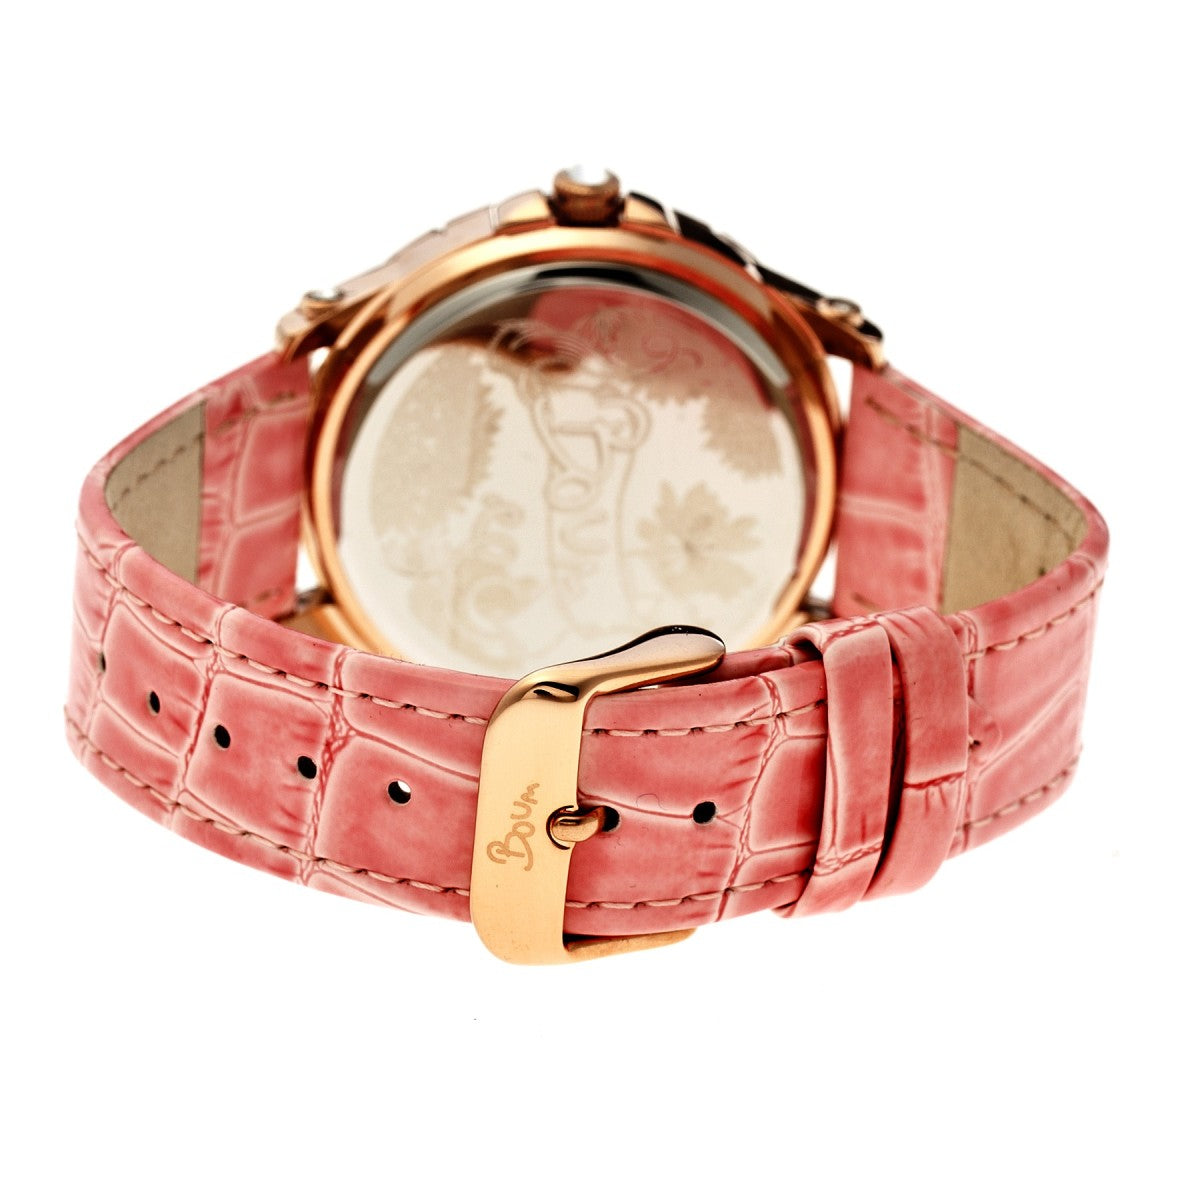 Boum Belle Crystal-Bezel Leather-Band Ladies Watch - Rose Gold/Pink - BOUBM2603